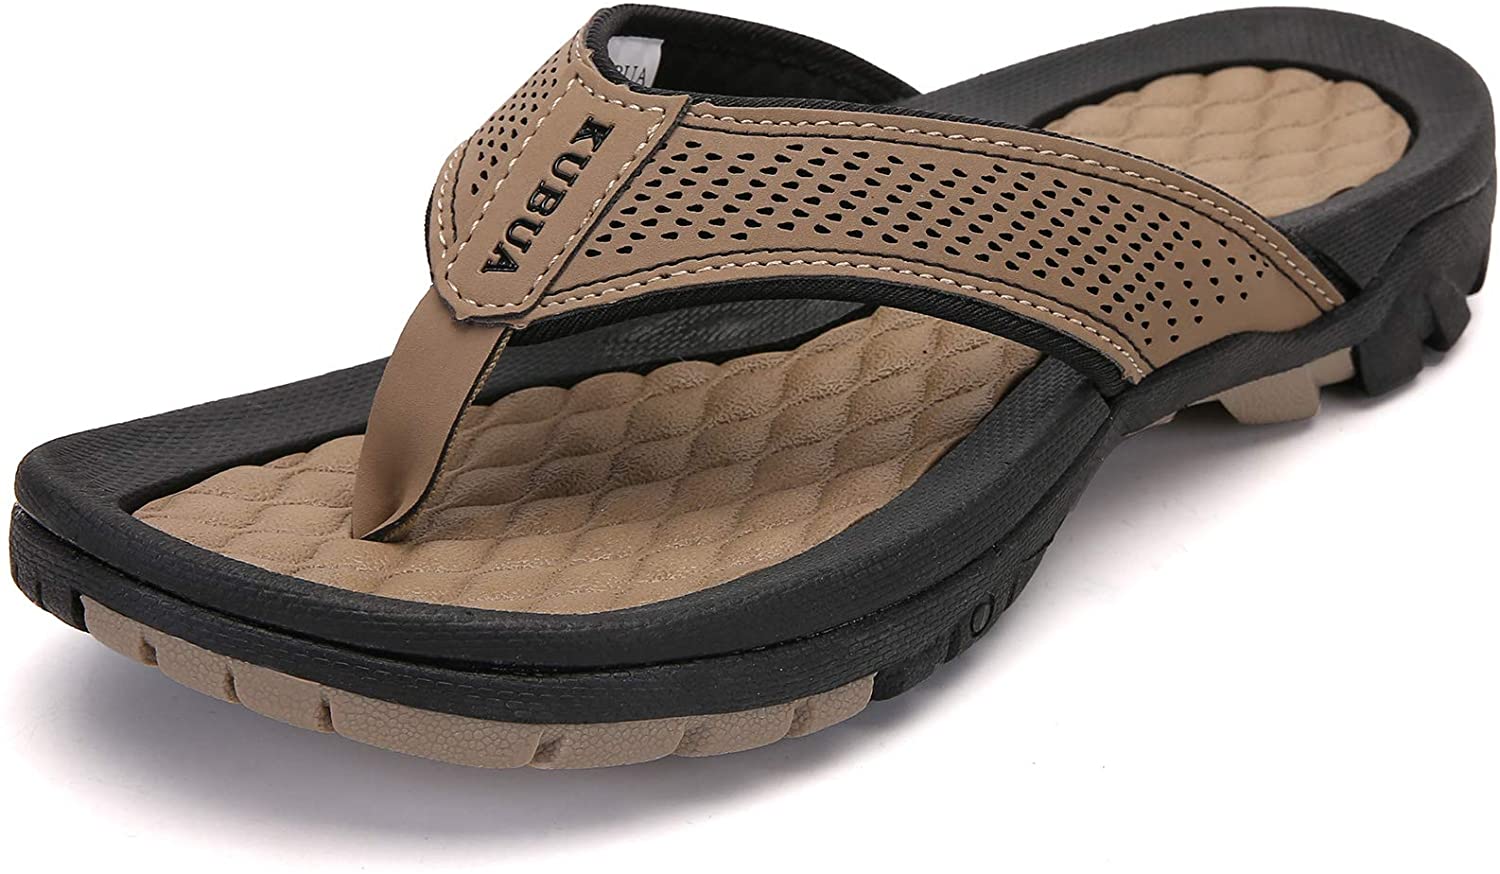 KUBUA Men's Beach Flip-Flops Water Sandals Outdoor Athletic Thong Sandal Slippers 